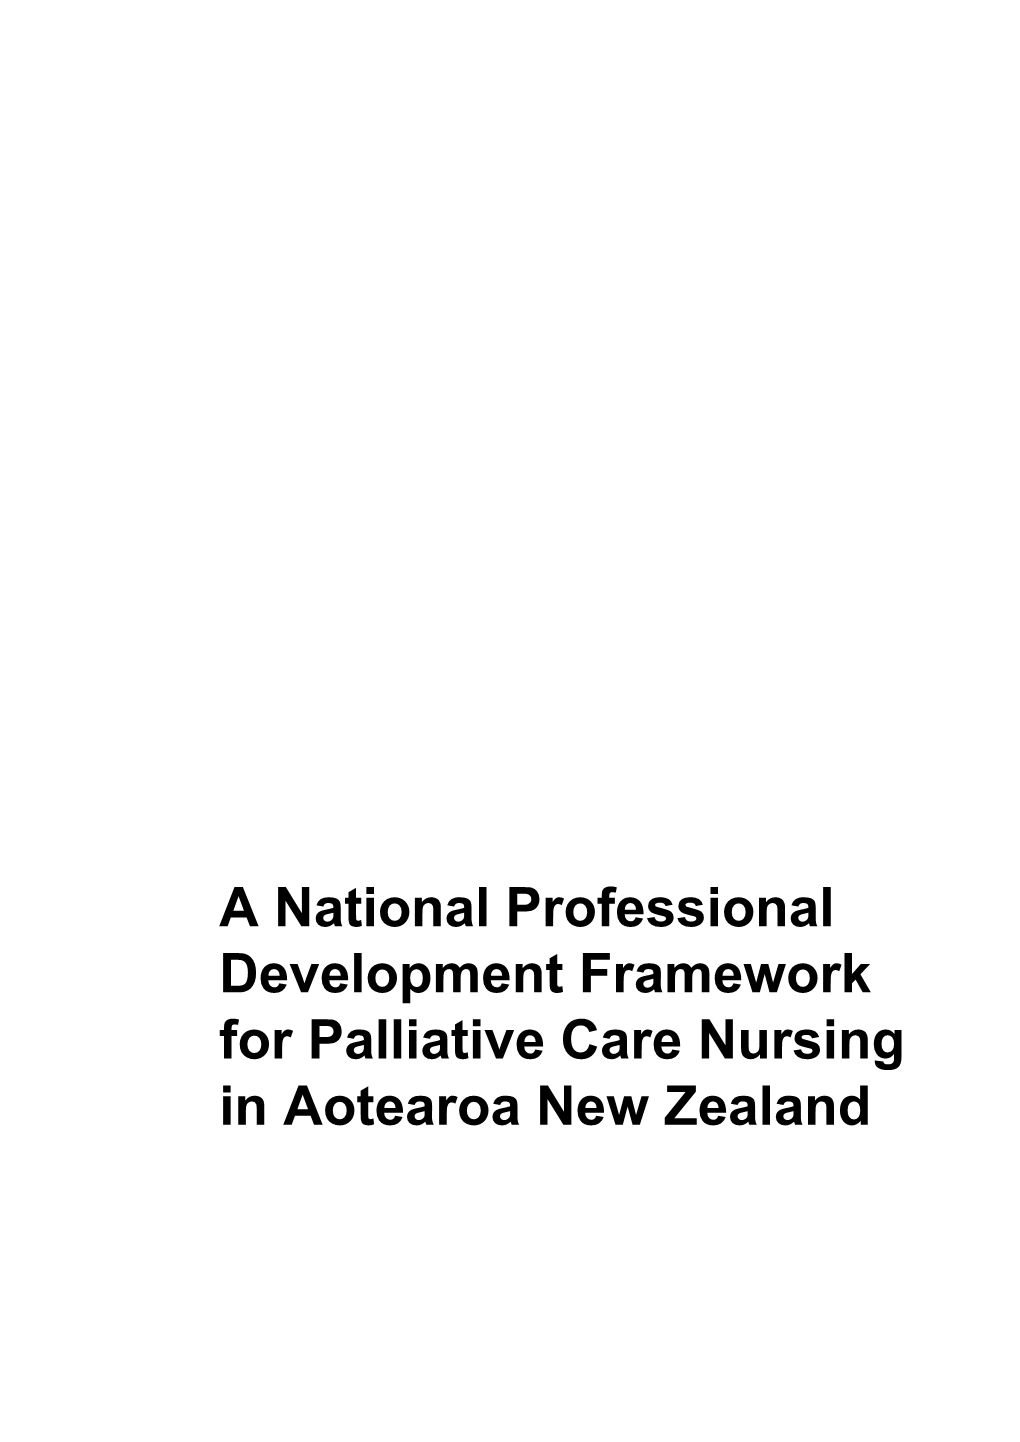 A National Professional Development Framework for Palliative Care Nursing in Aotearoa New Zealand